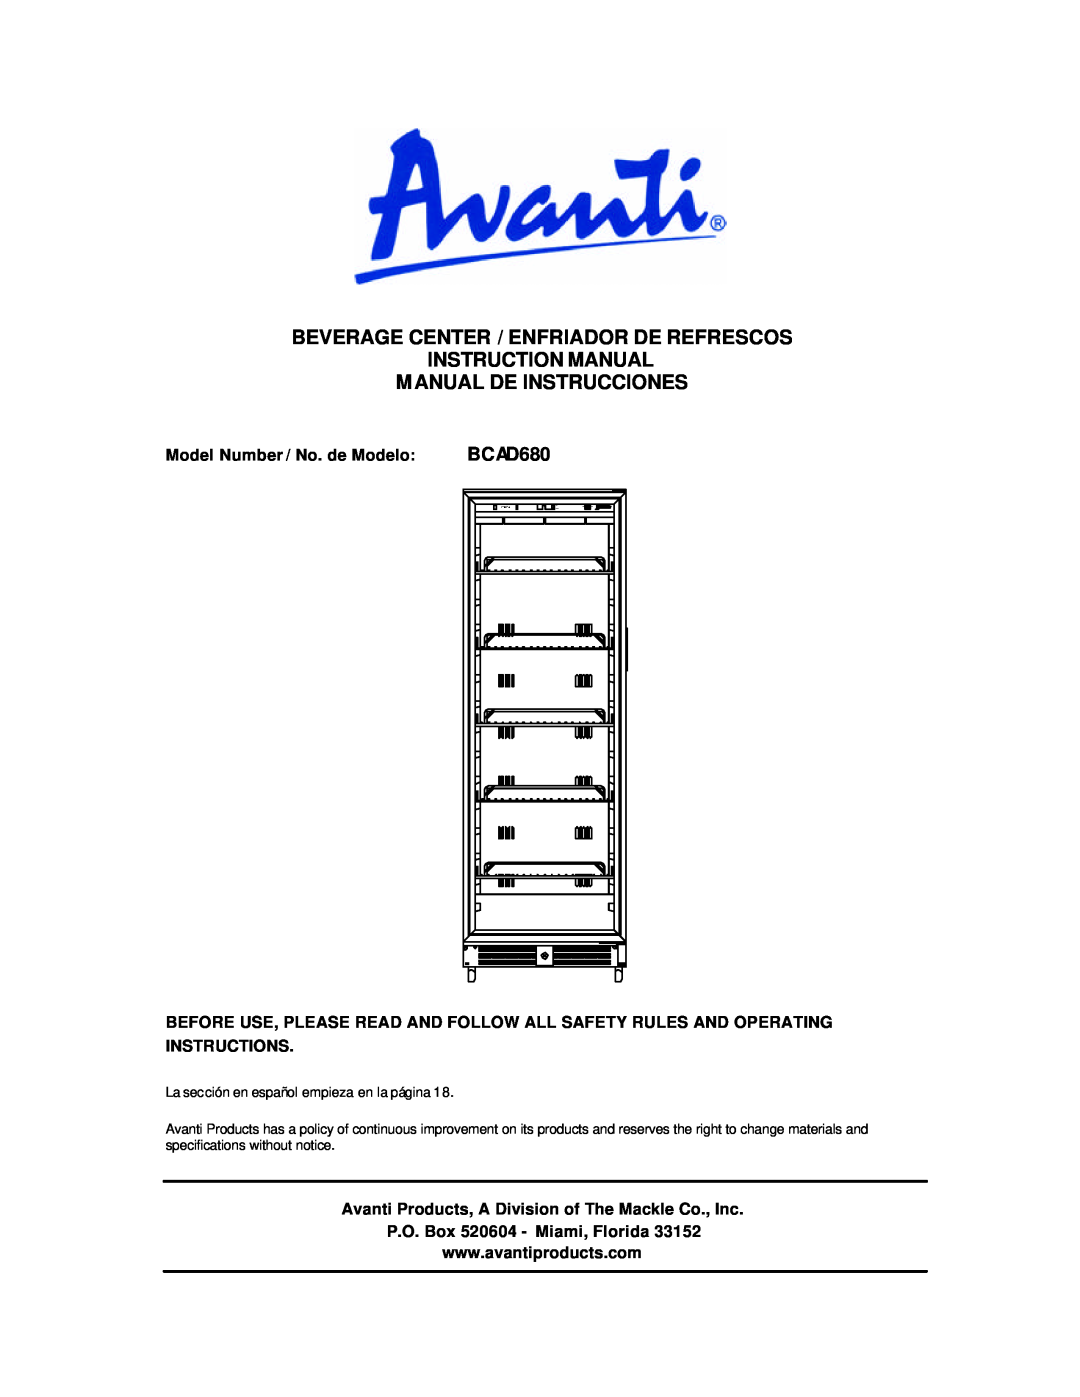 Avanti BCAD680 instruction manual Beverage Center / Enfriador De Refrescos, Model Number / No. de Modelo 